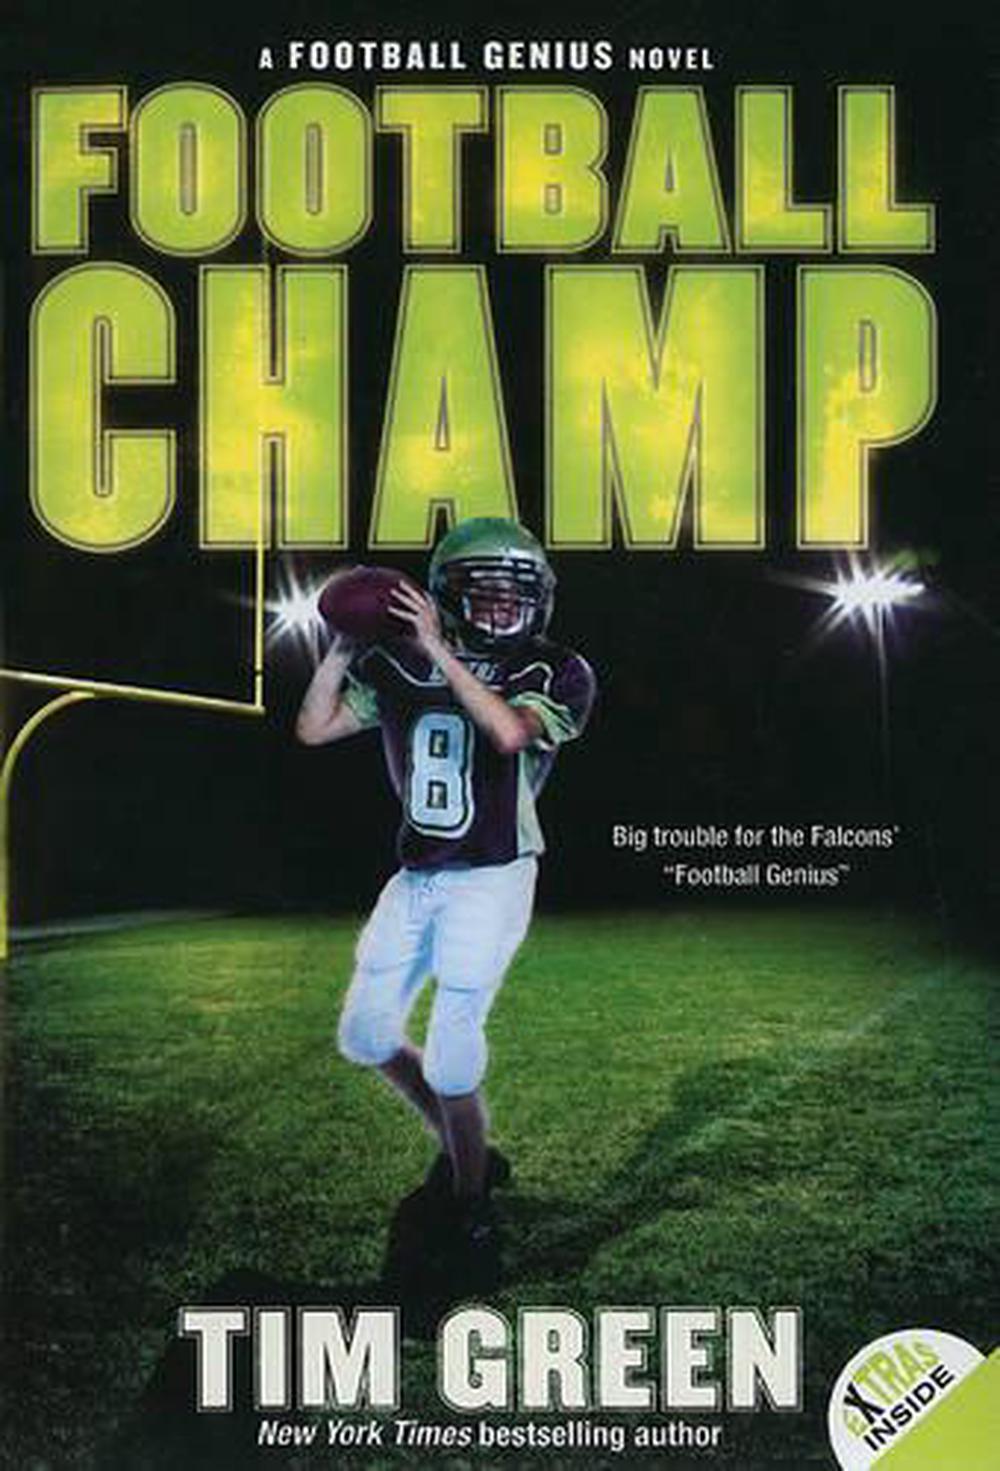 Football Champ A Football Genius Novel by Tim Green (English